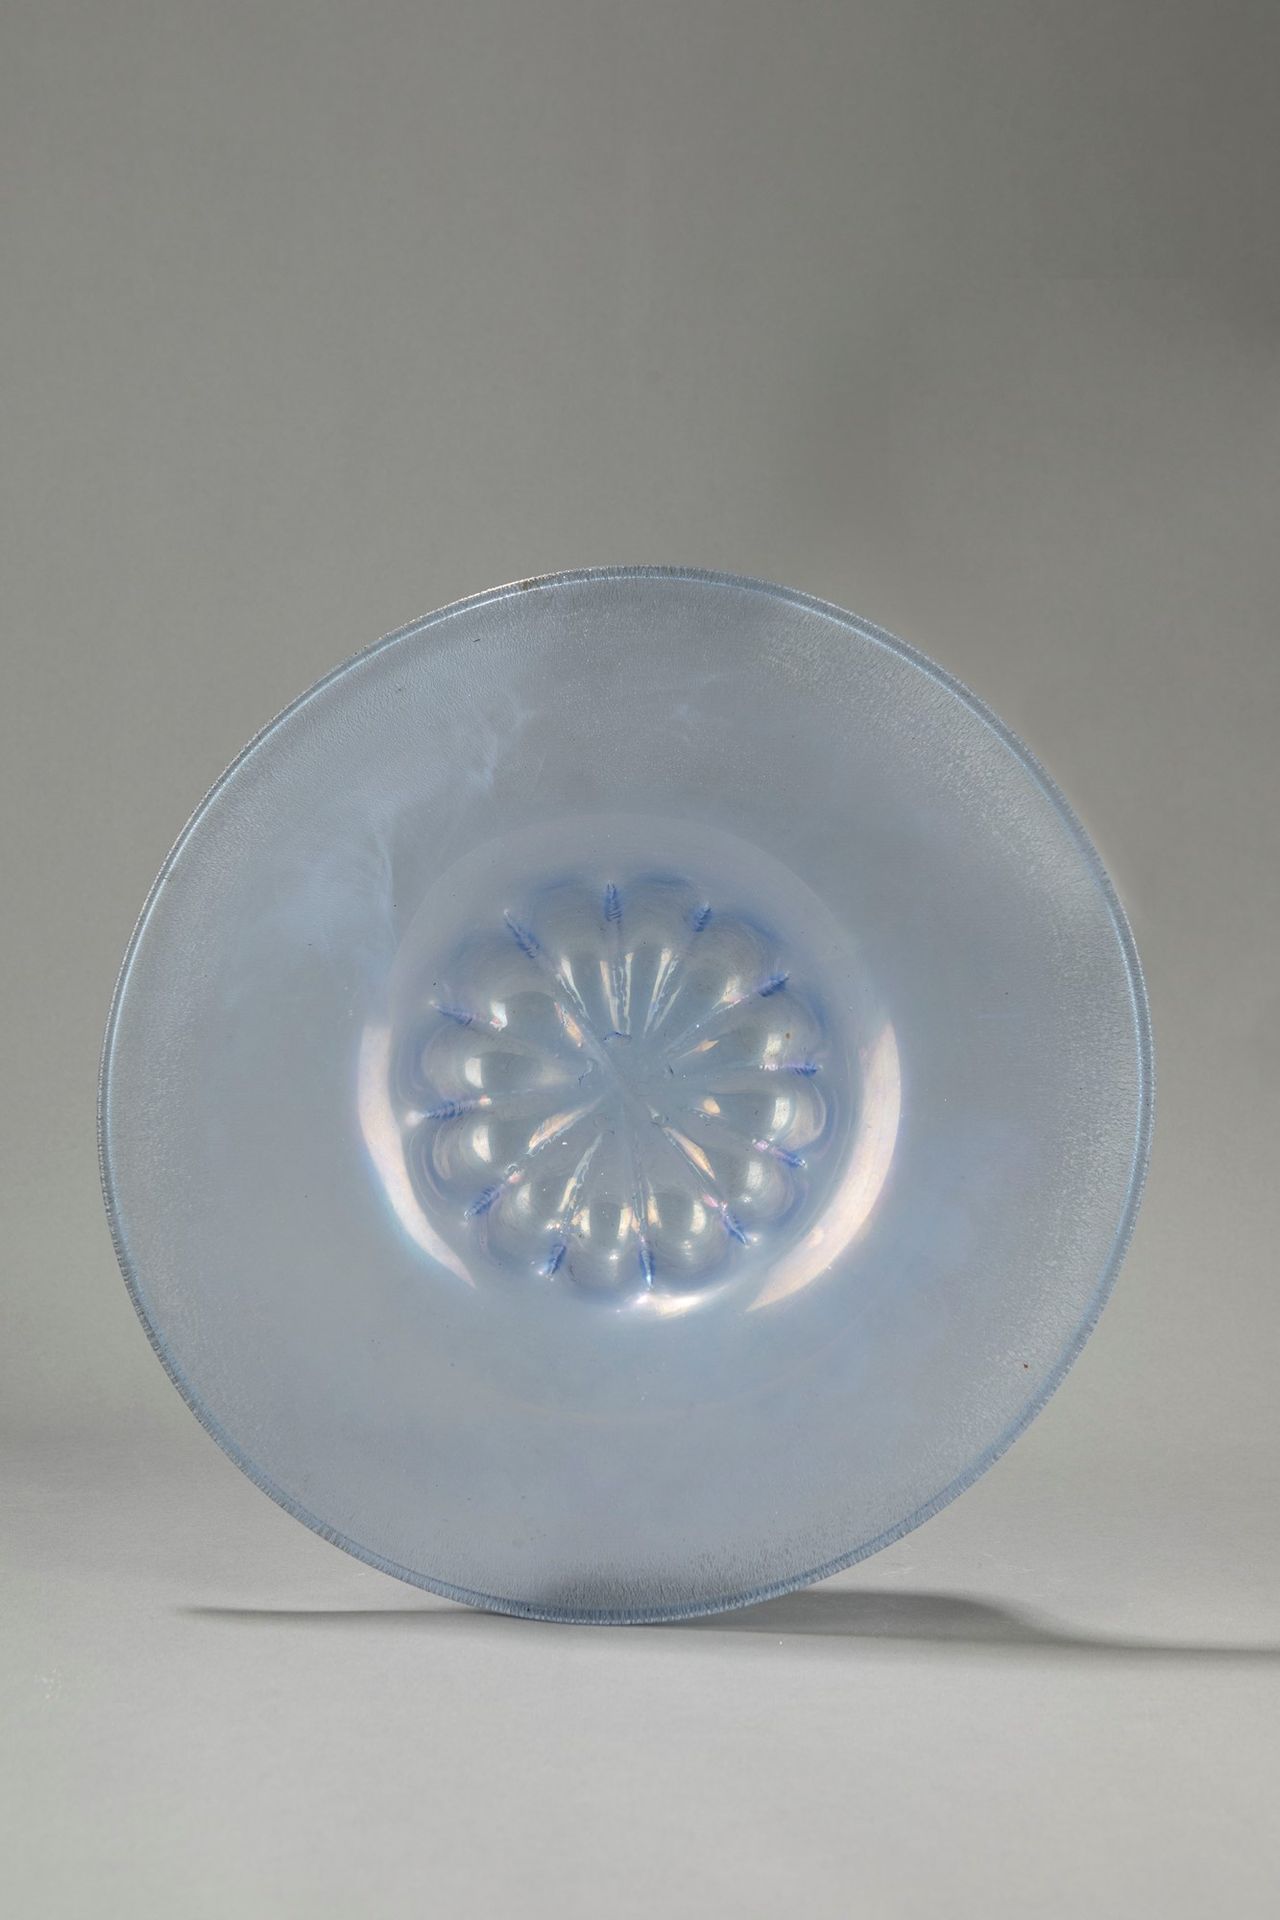 VITTORIO ZECCHIN 中心器皿，1920年左右

直径34厘米
蓝色吹制玻璃。

威尼尼制造